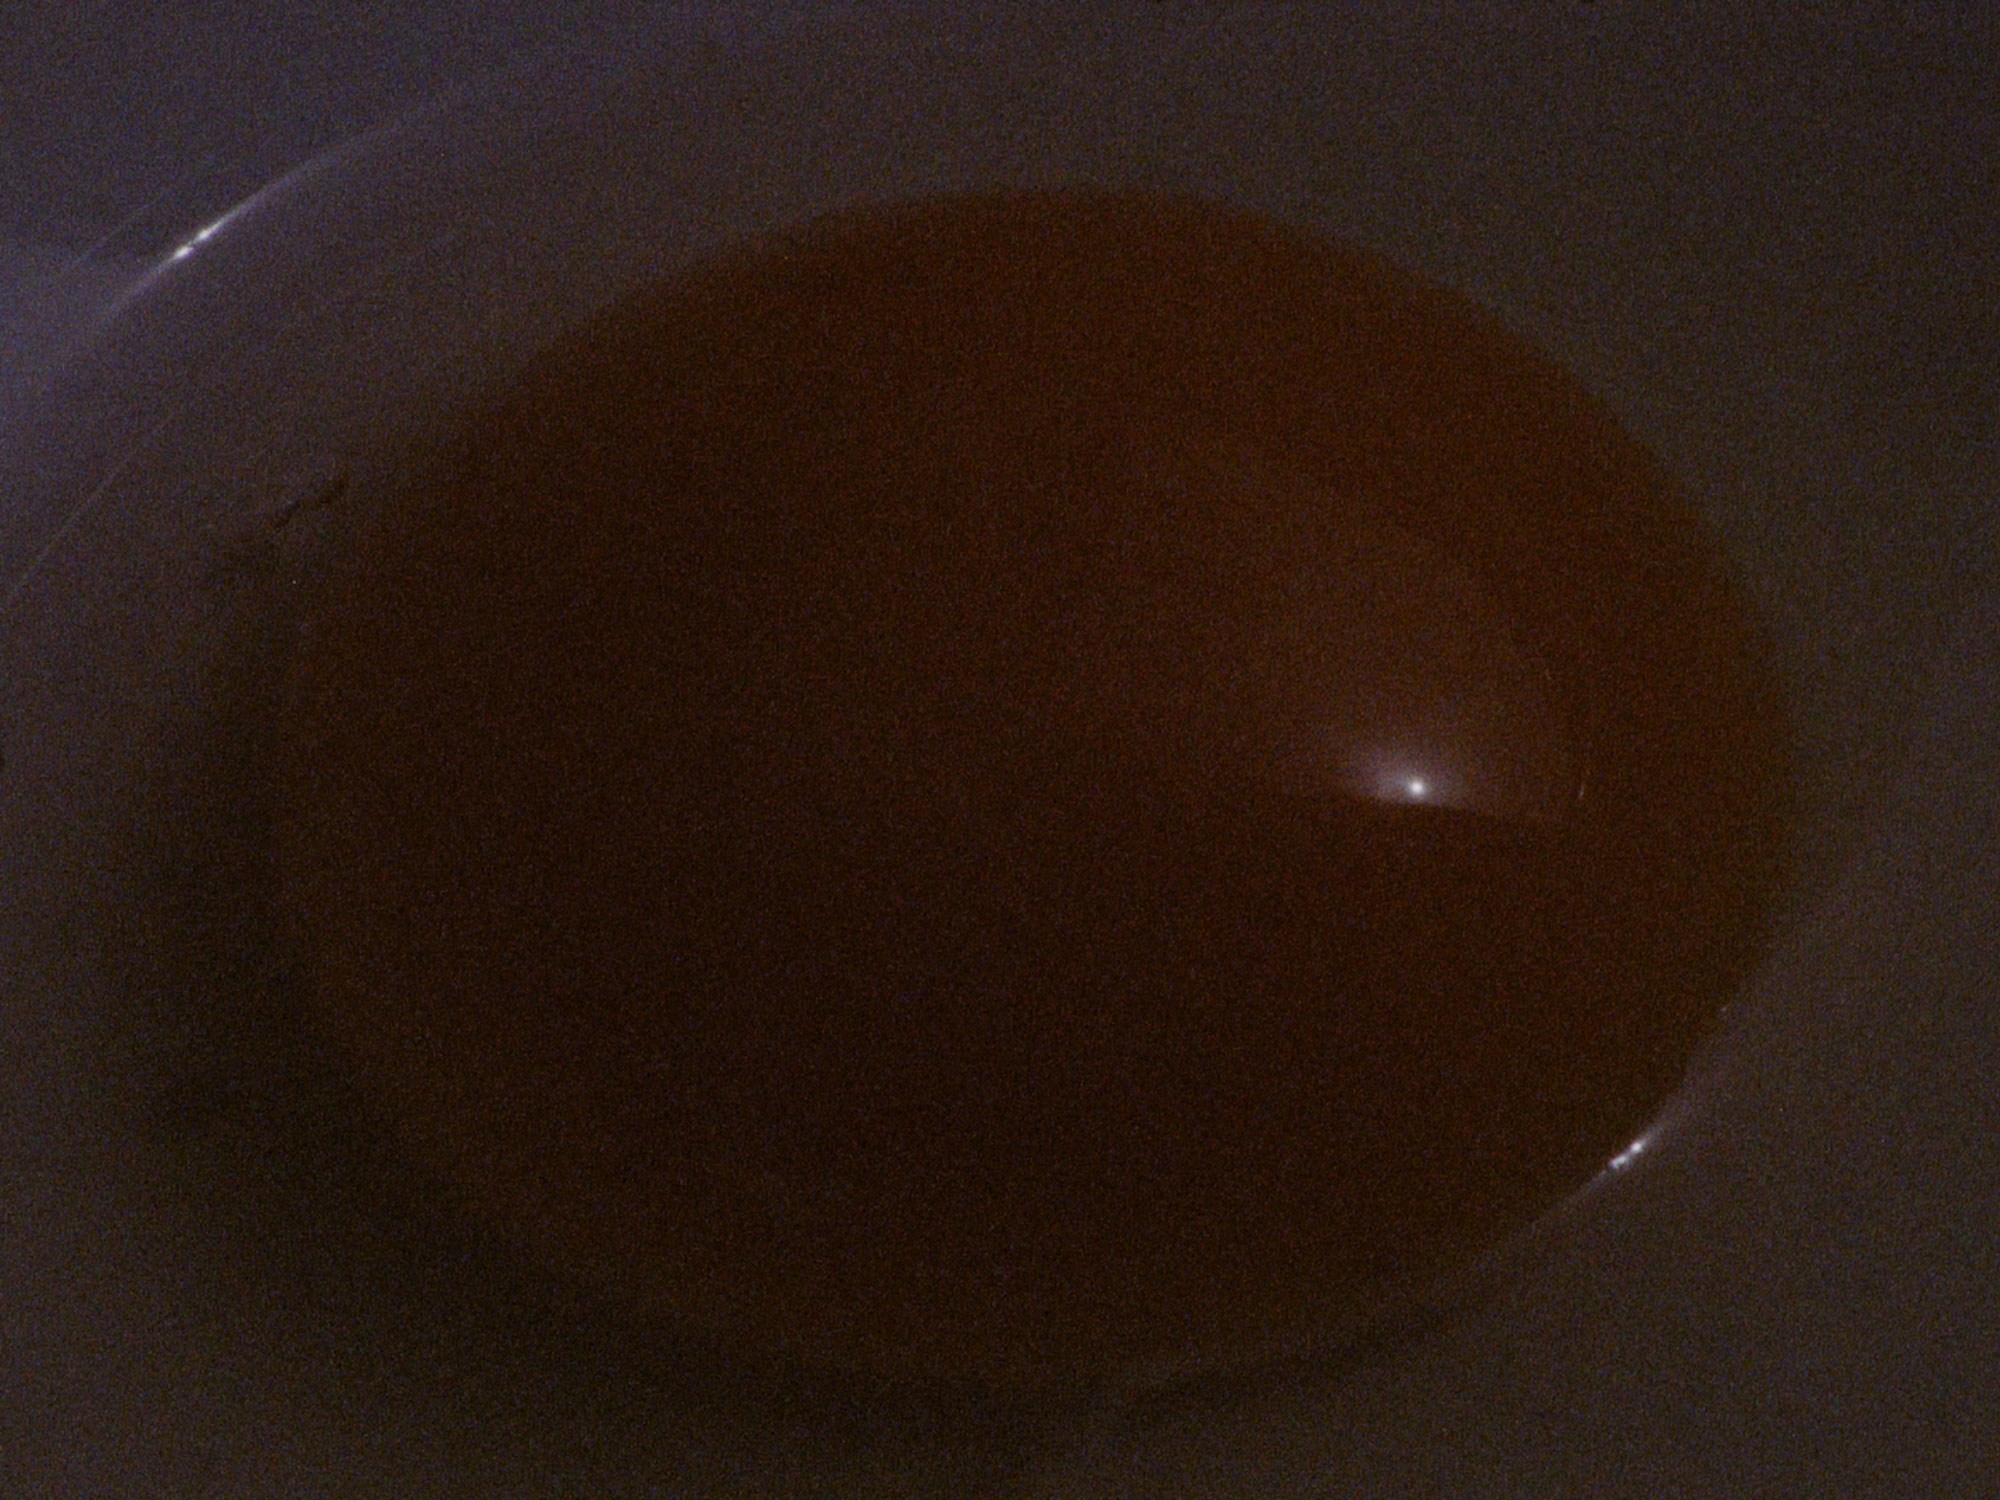 film still: an egg